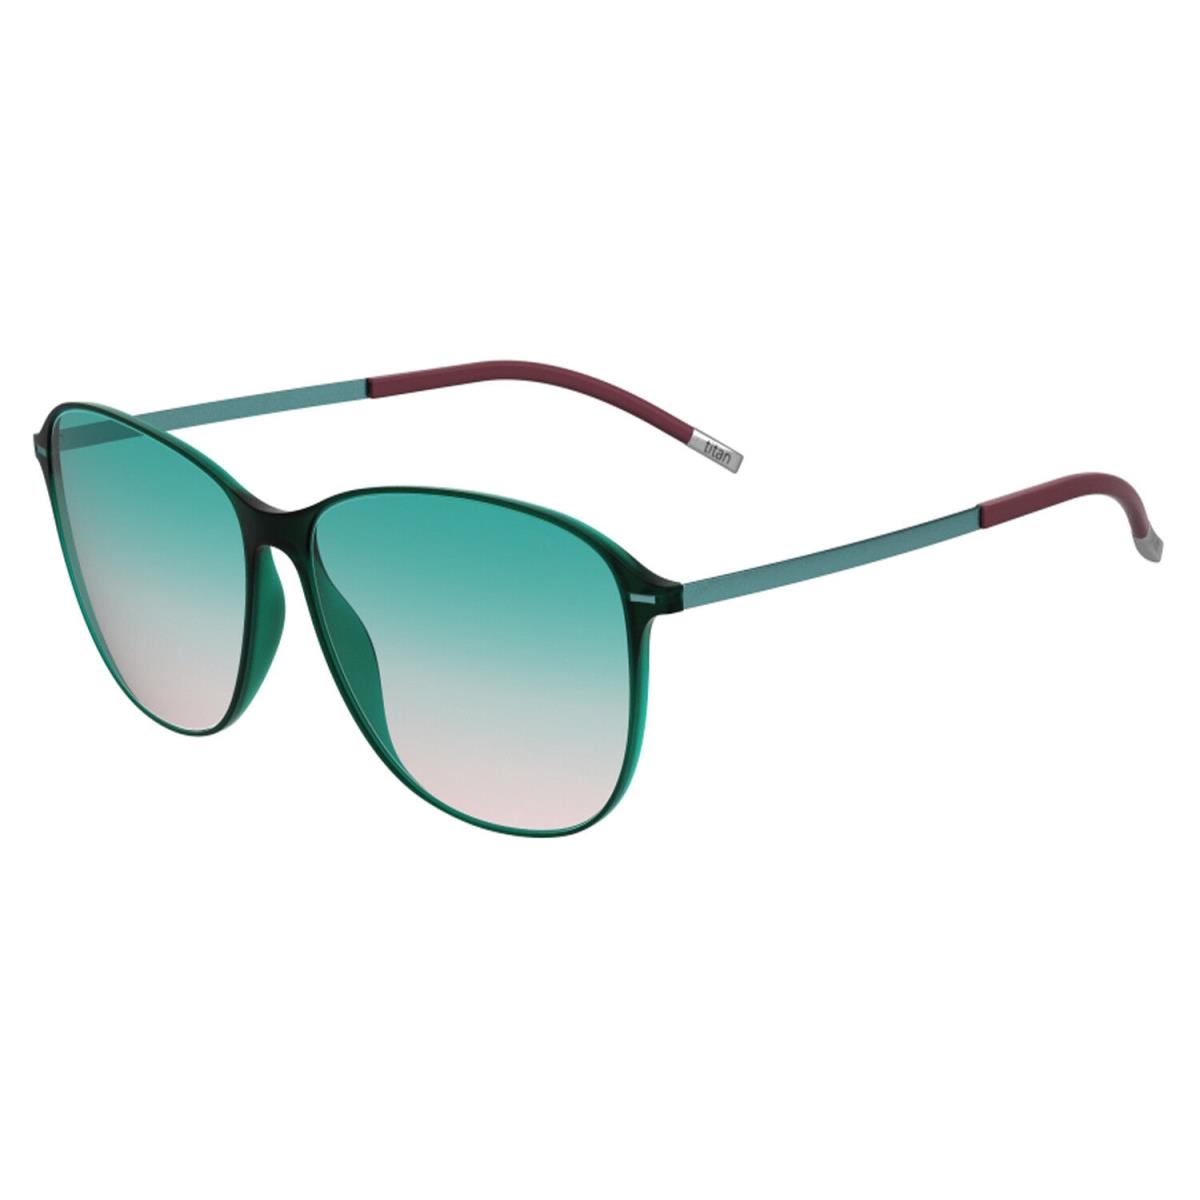 Silhouette Urban Sun Sunglasses Dark Green Matte / Teal Rose Grad 3191-75-5540